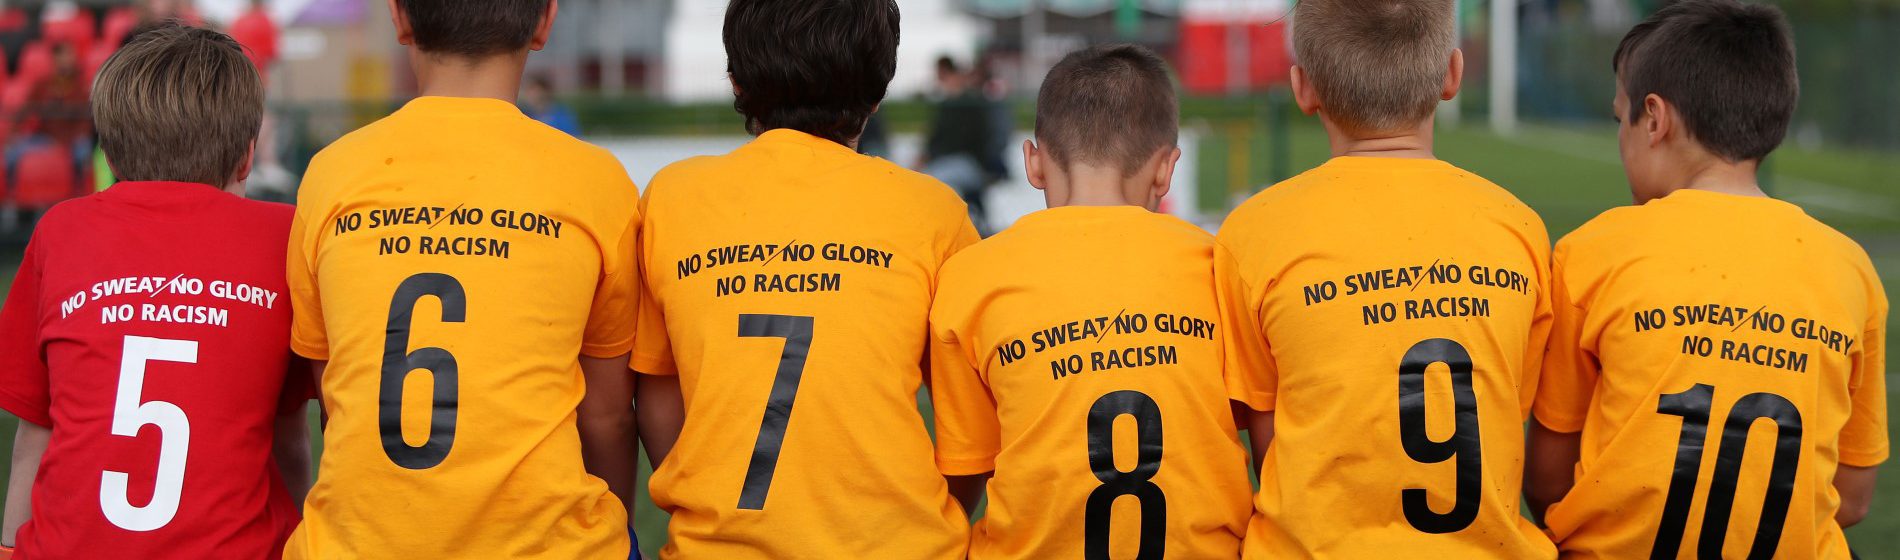 Club Brugge Cup No Sweat, No Glory, No Racism